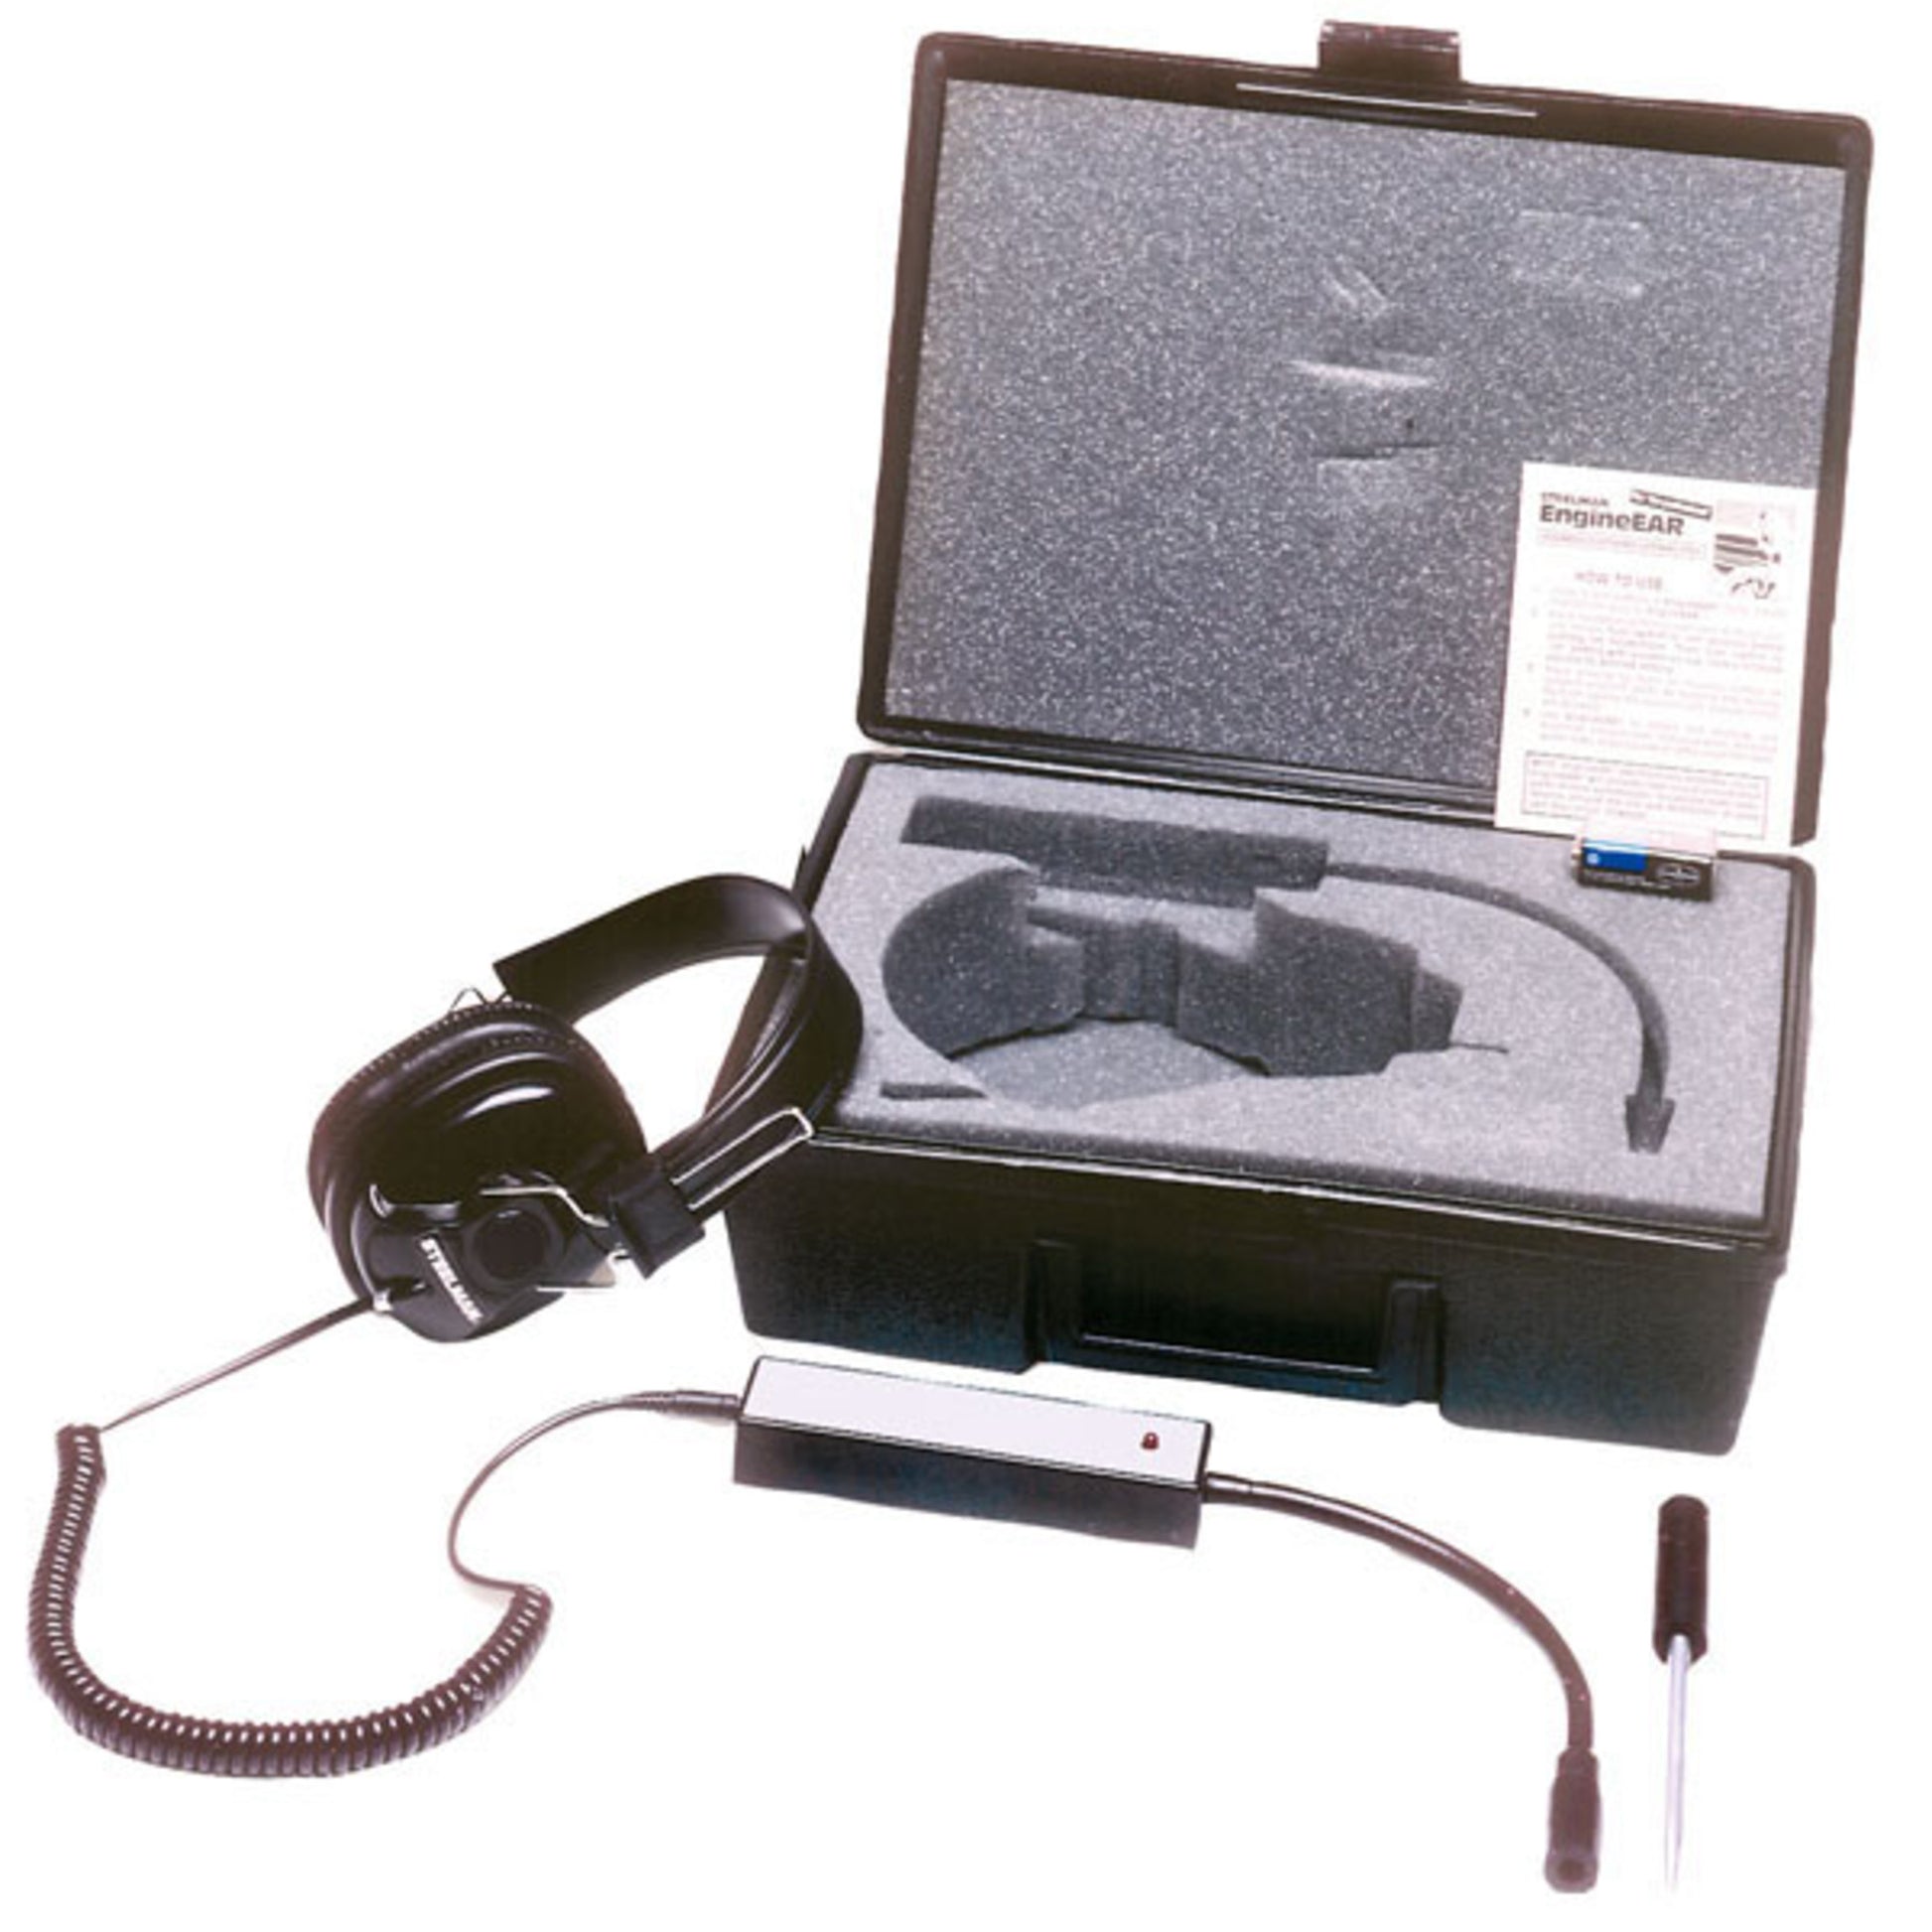 BRILLIANT TOOLS Mechanics Stethoscope